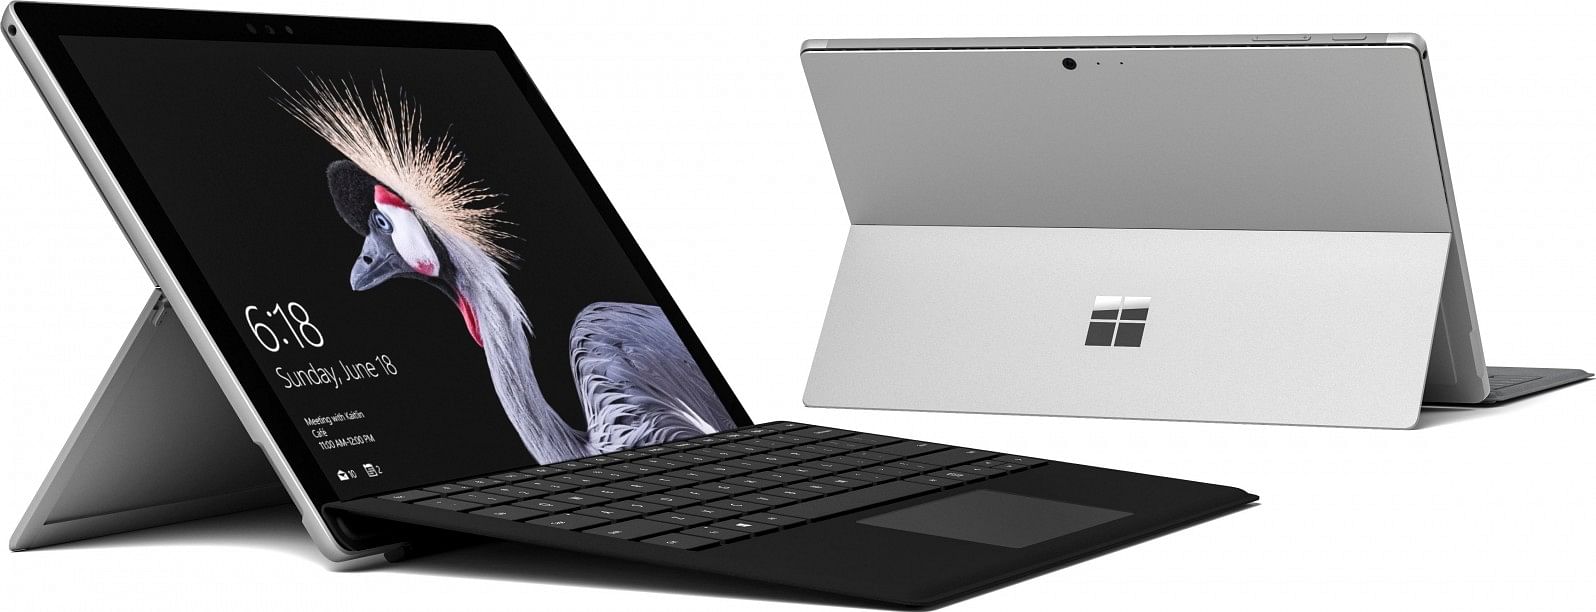 Microsoft Surface Pro 5, Core i5-7th Gen, 8GB 128GB SSD, 12.3